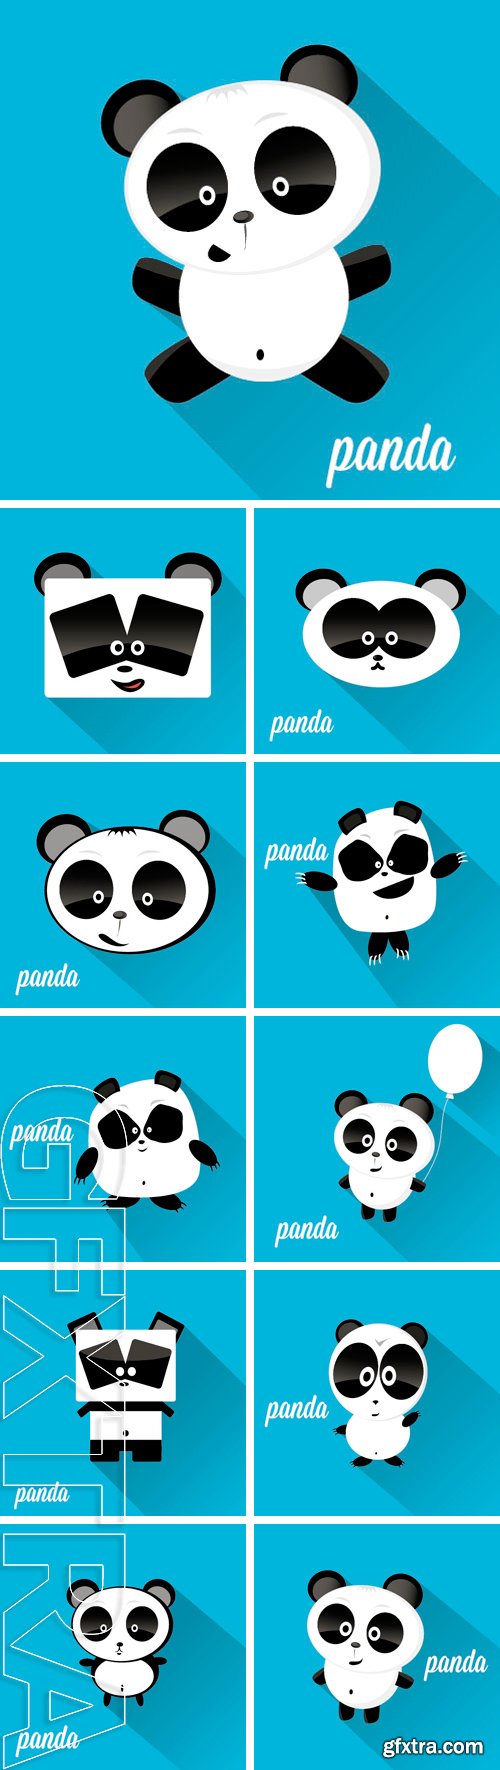 Stock Vectors - Cartoon panda icon